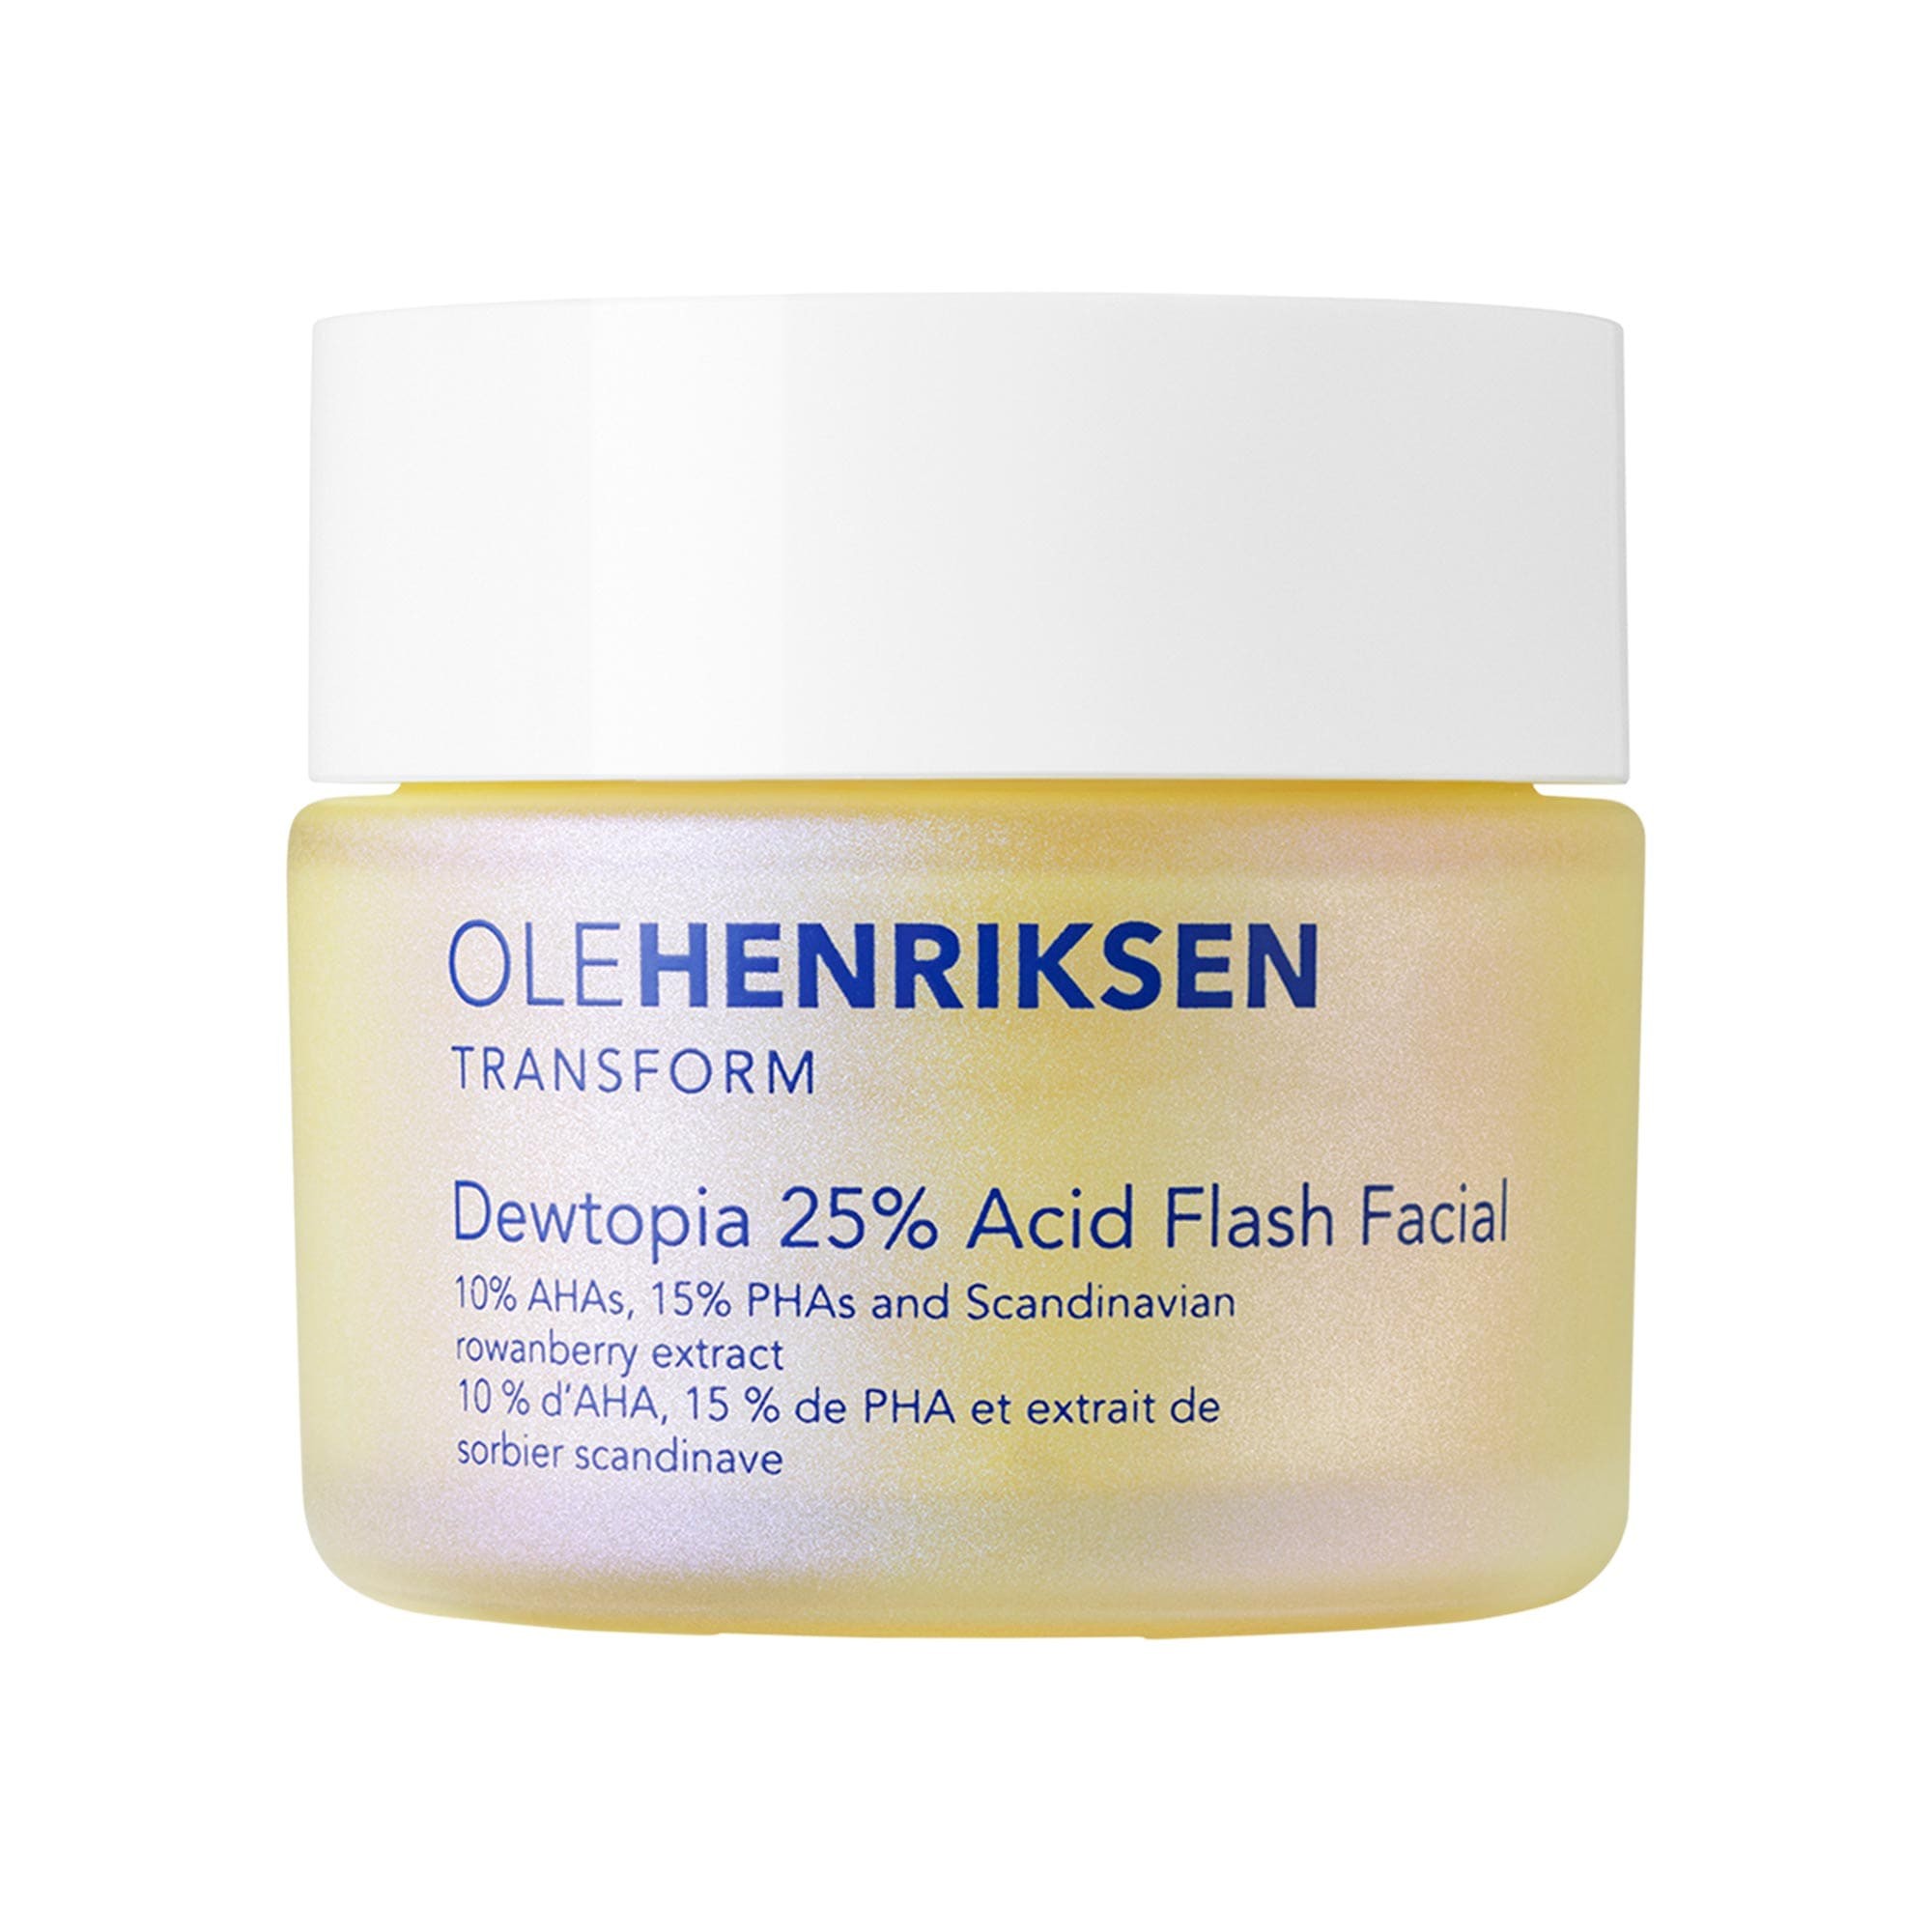 OleHenriksen Dewtopia 25% AHA + PHA Flash Facial Exfoliating Face Mask